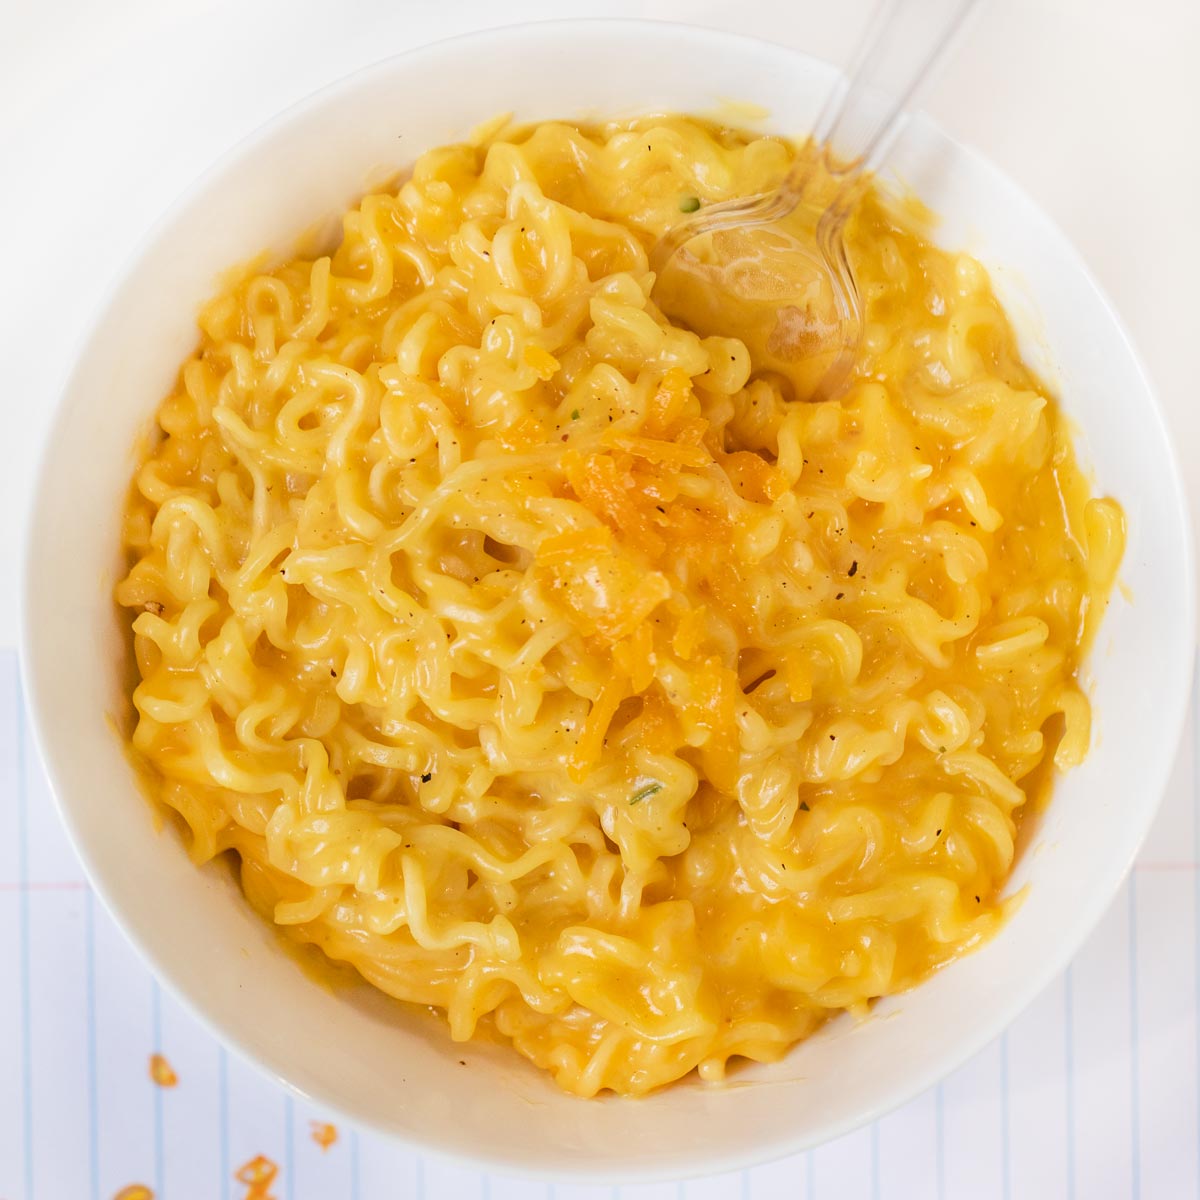 Microwave Ramen Mac and Cheese Recipe - Dorm Room Cook